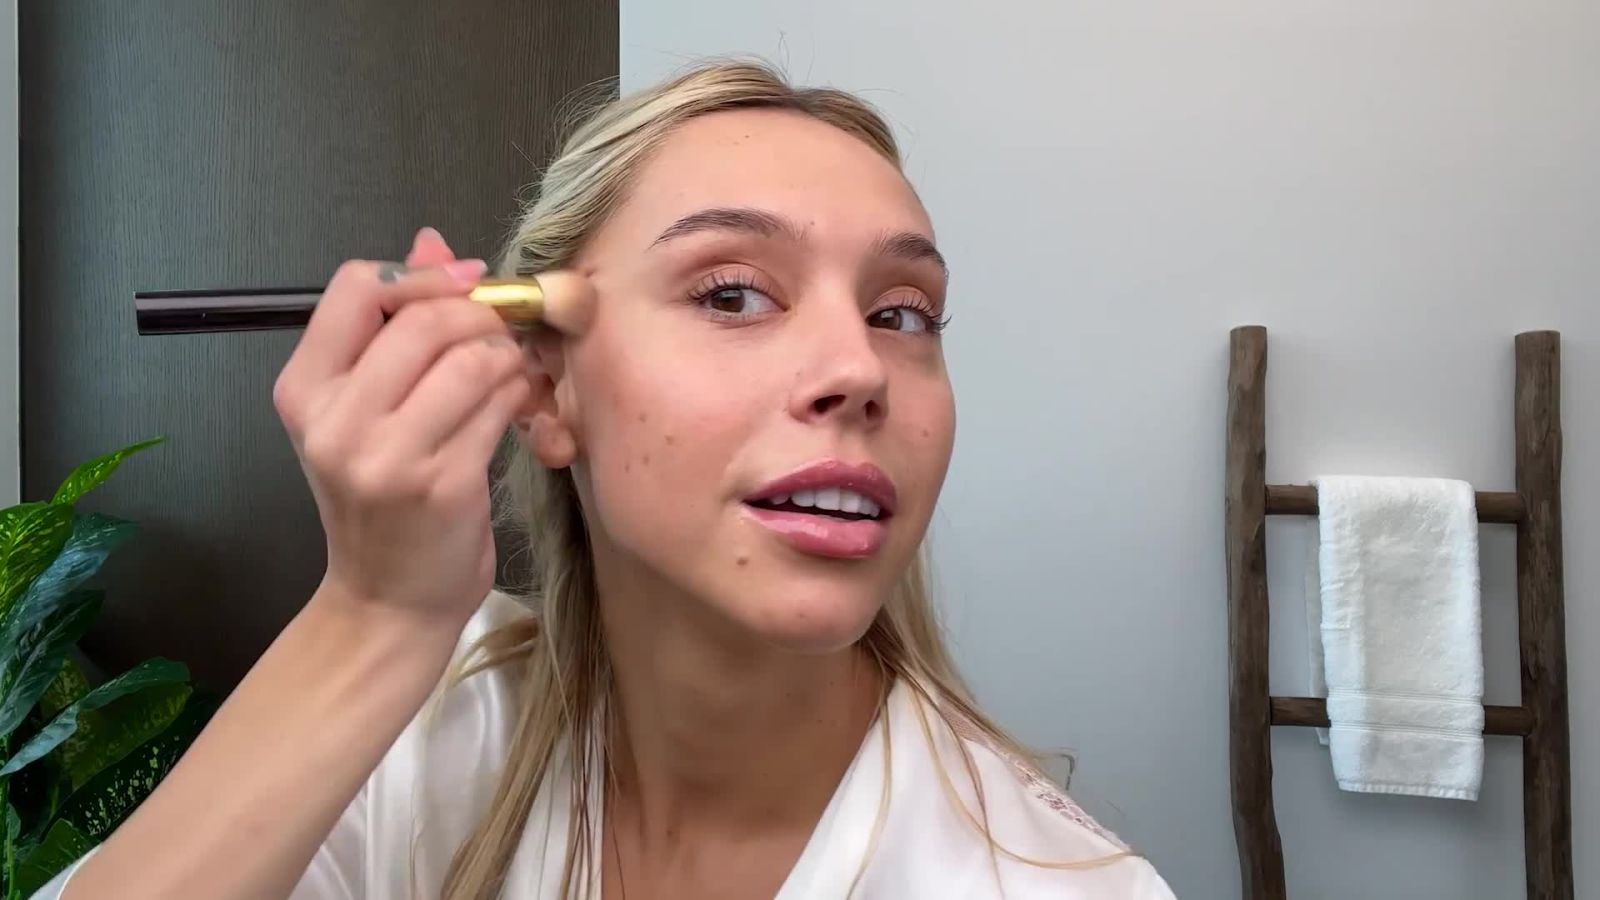 Watch Alexis Ren Do Her Face-Lifting Makeup Routine